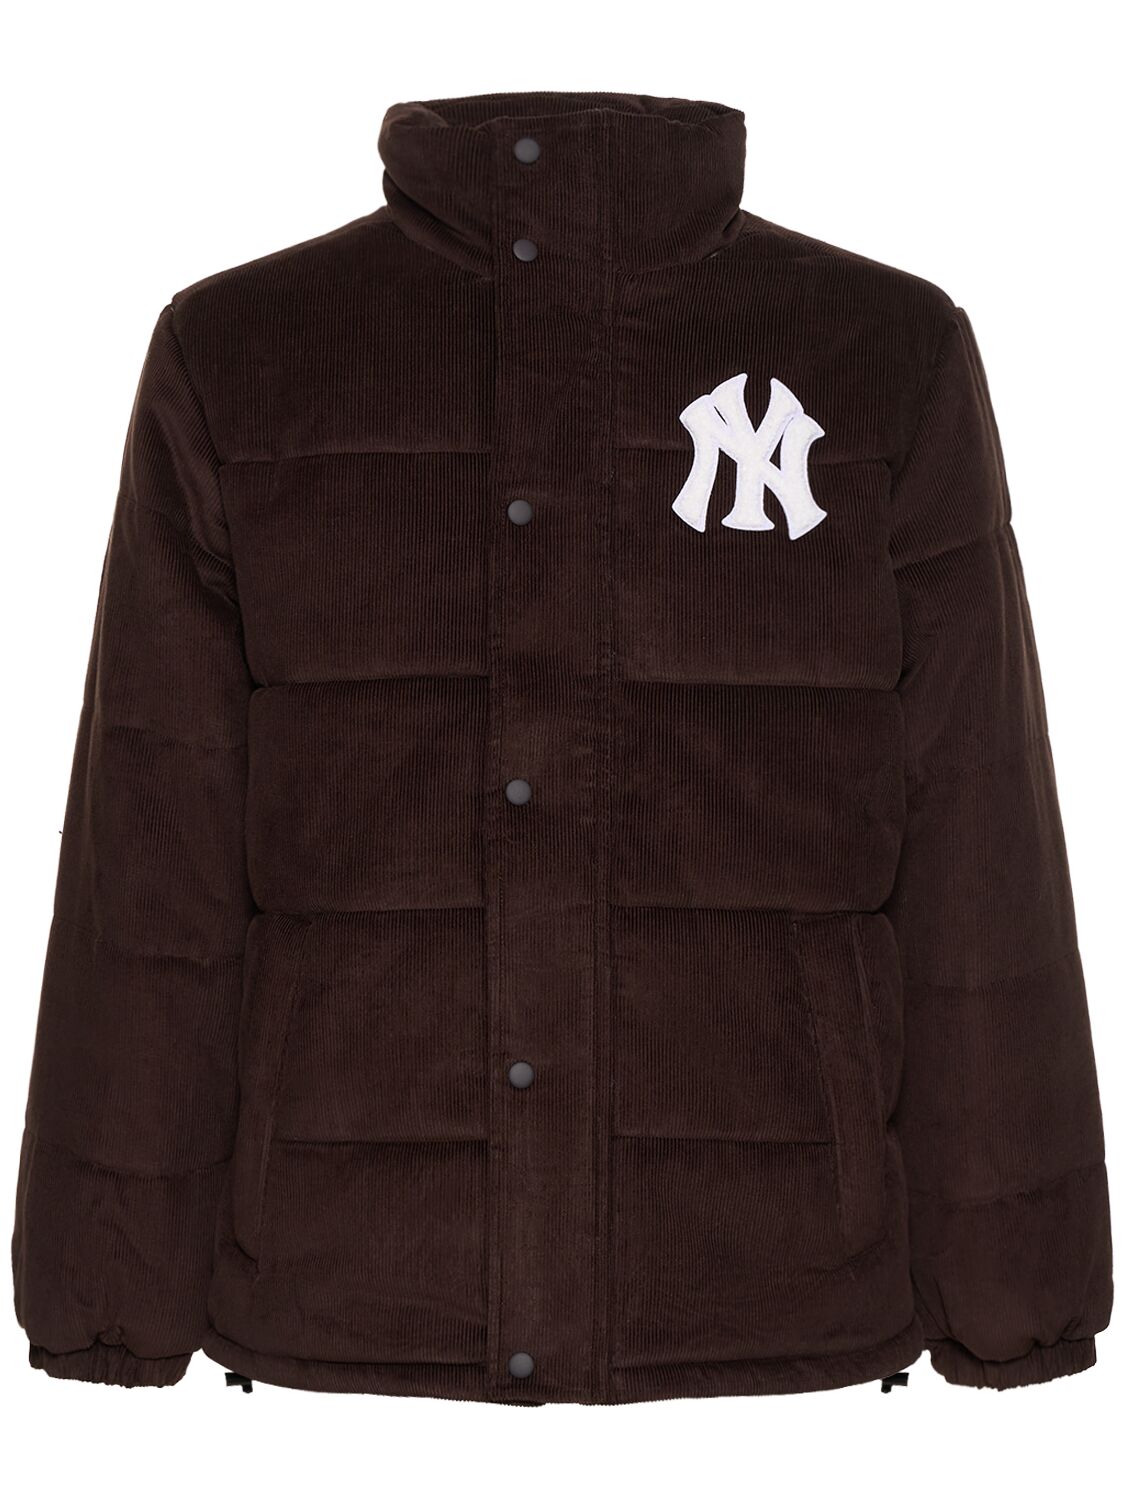 New York Yankees Mlb Puffer Jacket